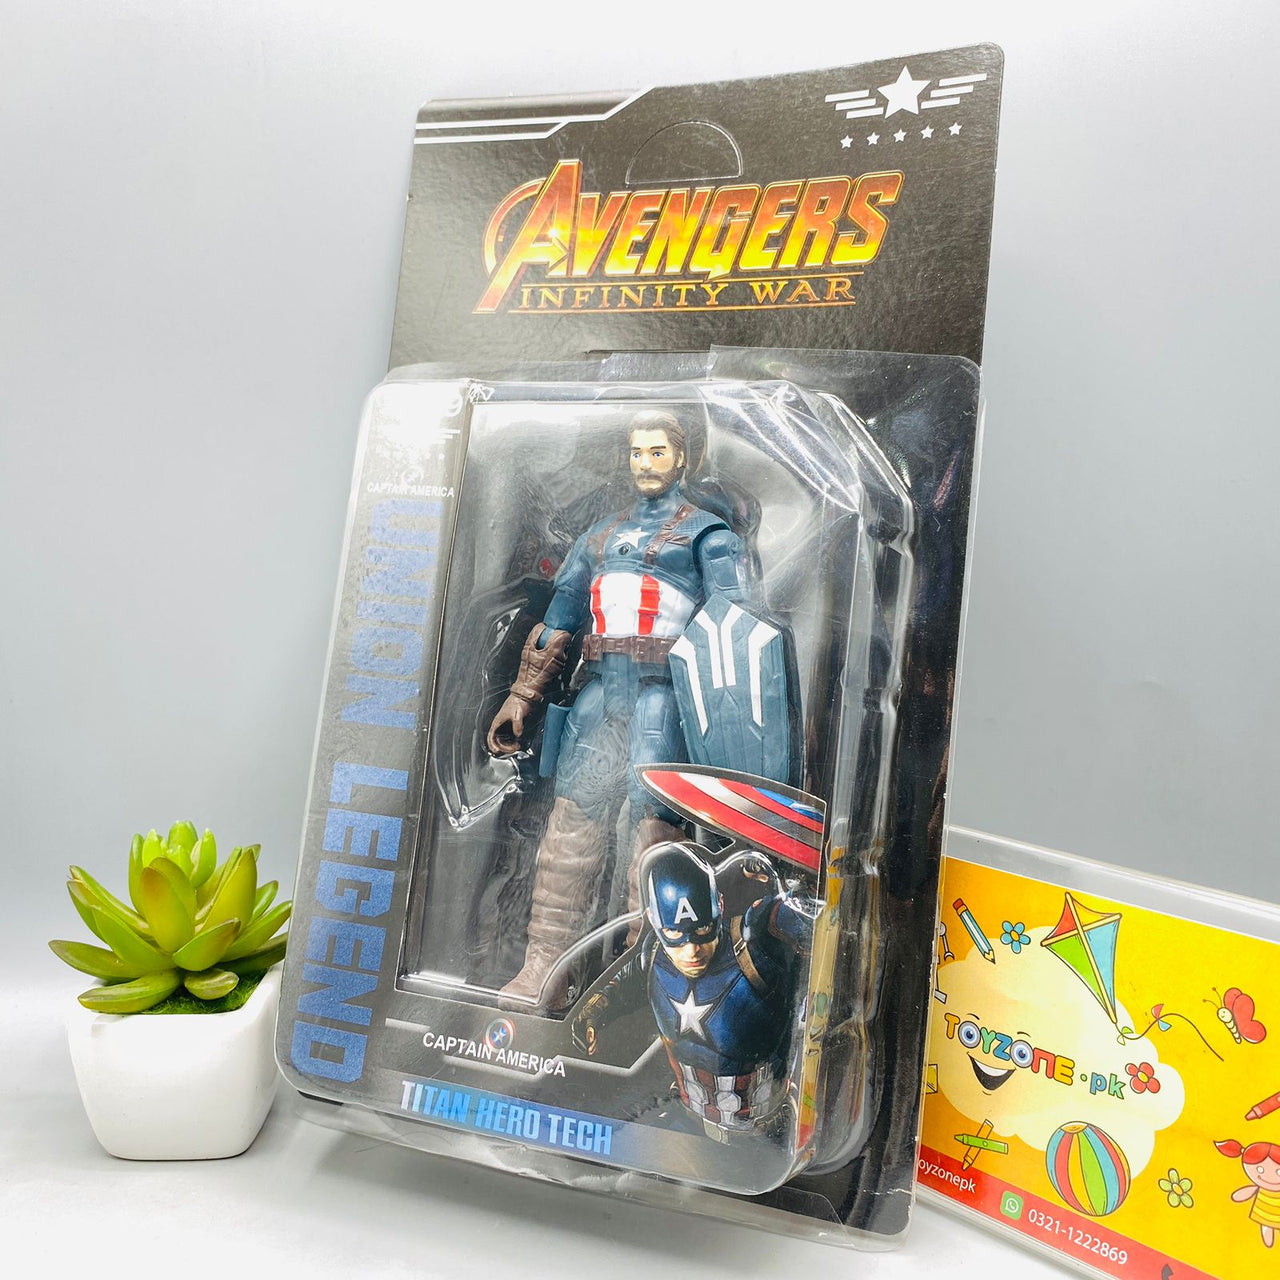 Captain America Action Figure Toy